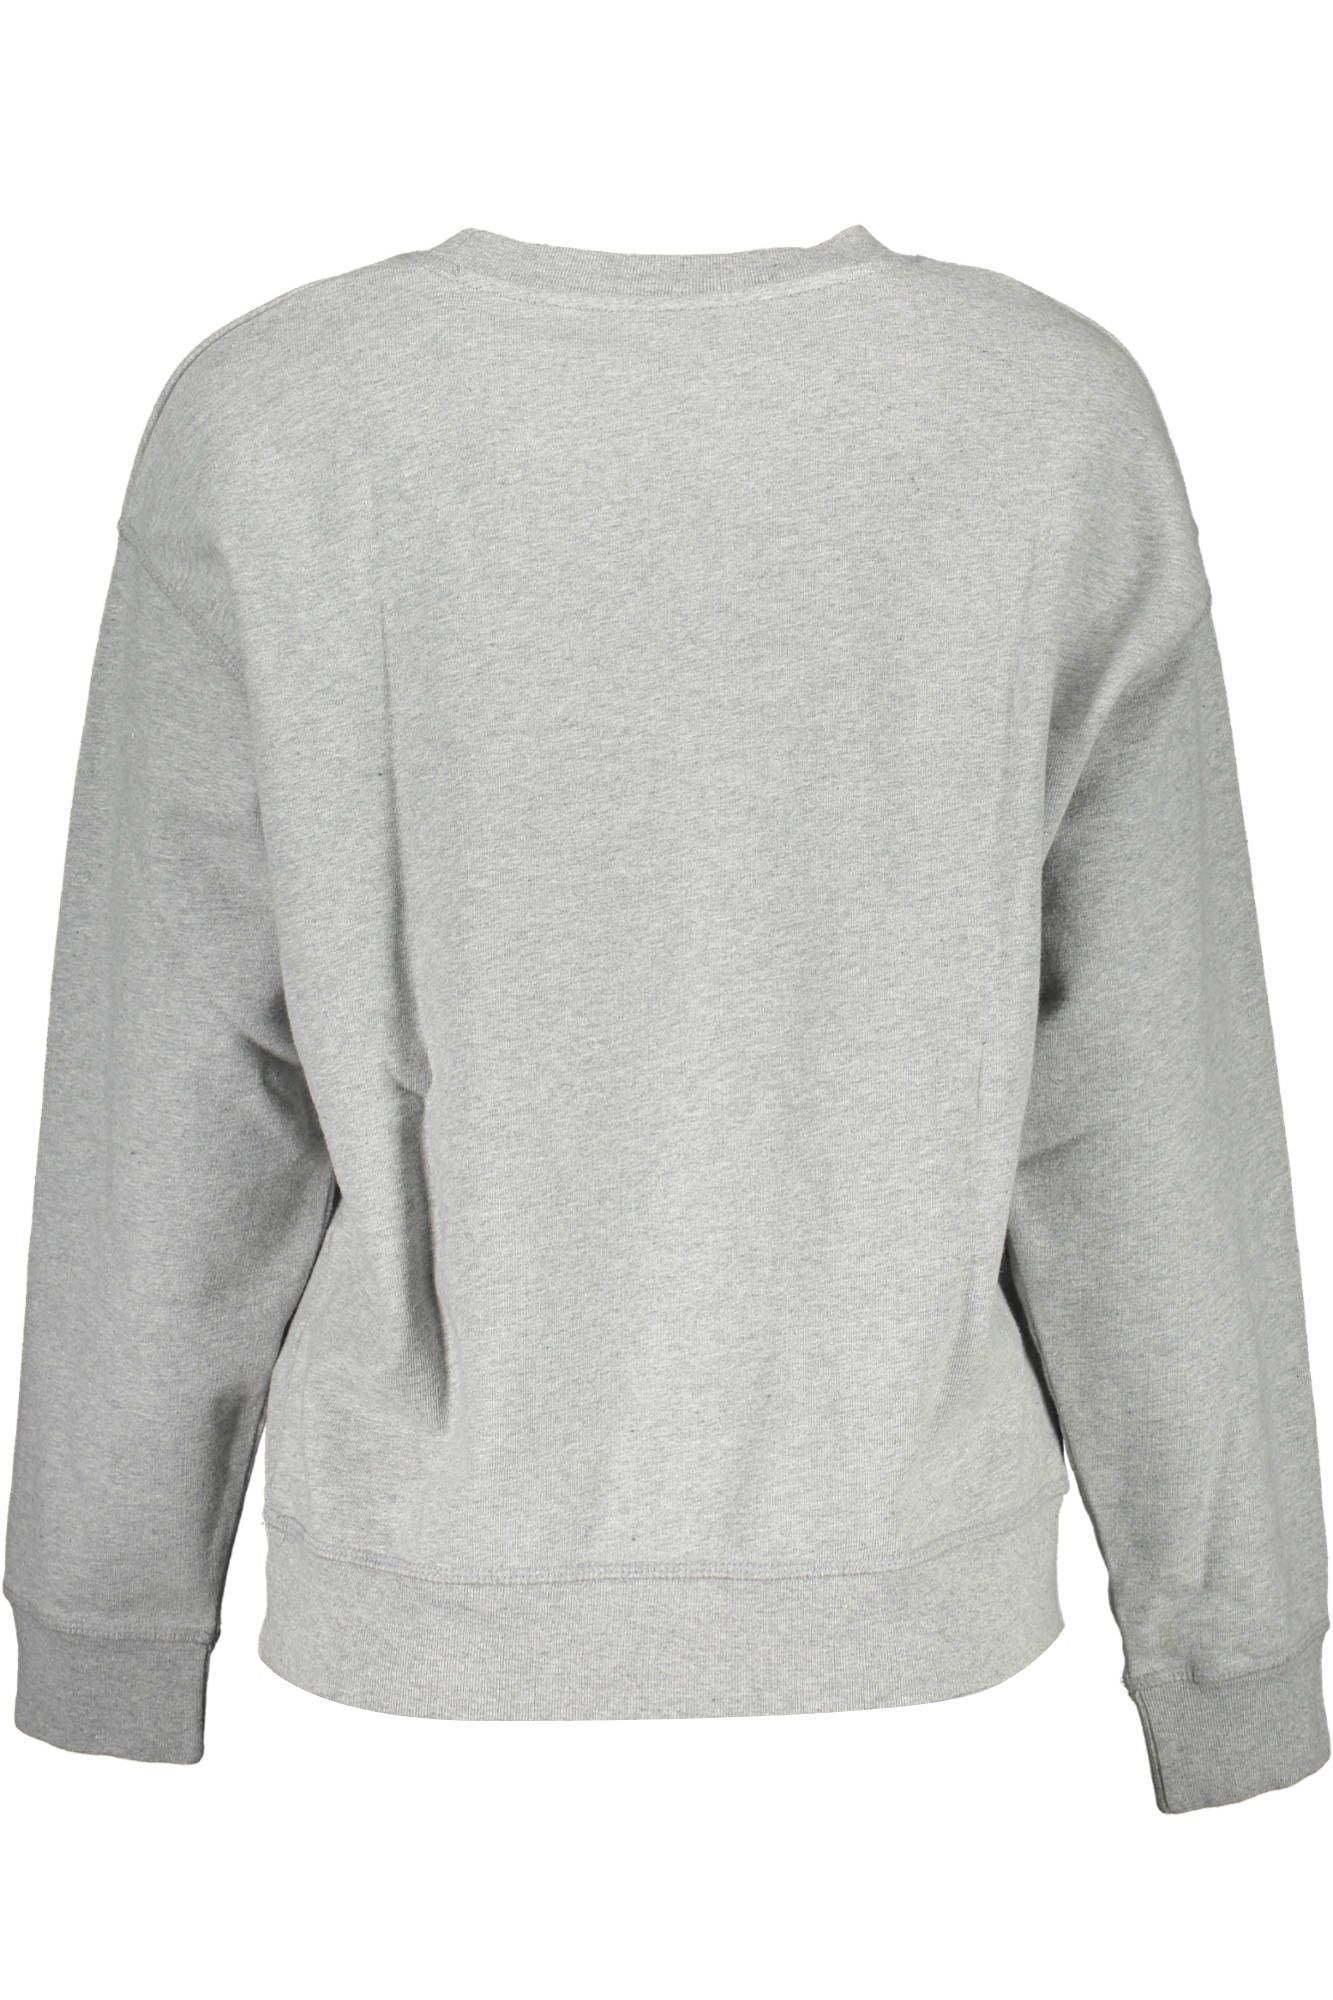 Levi's Chic Gray Cotton Round Neck Sweatshirt - PER.FASHION